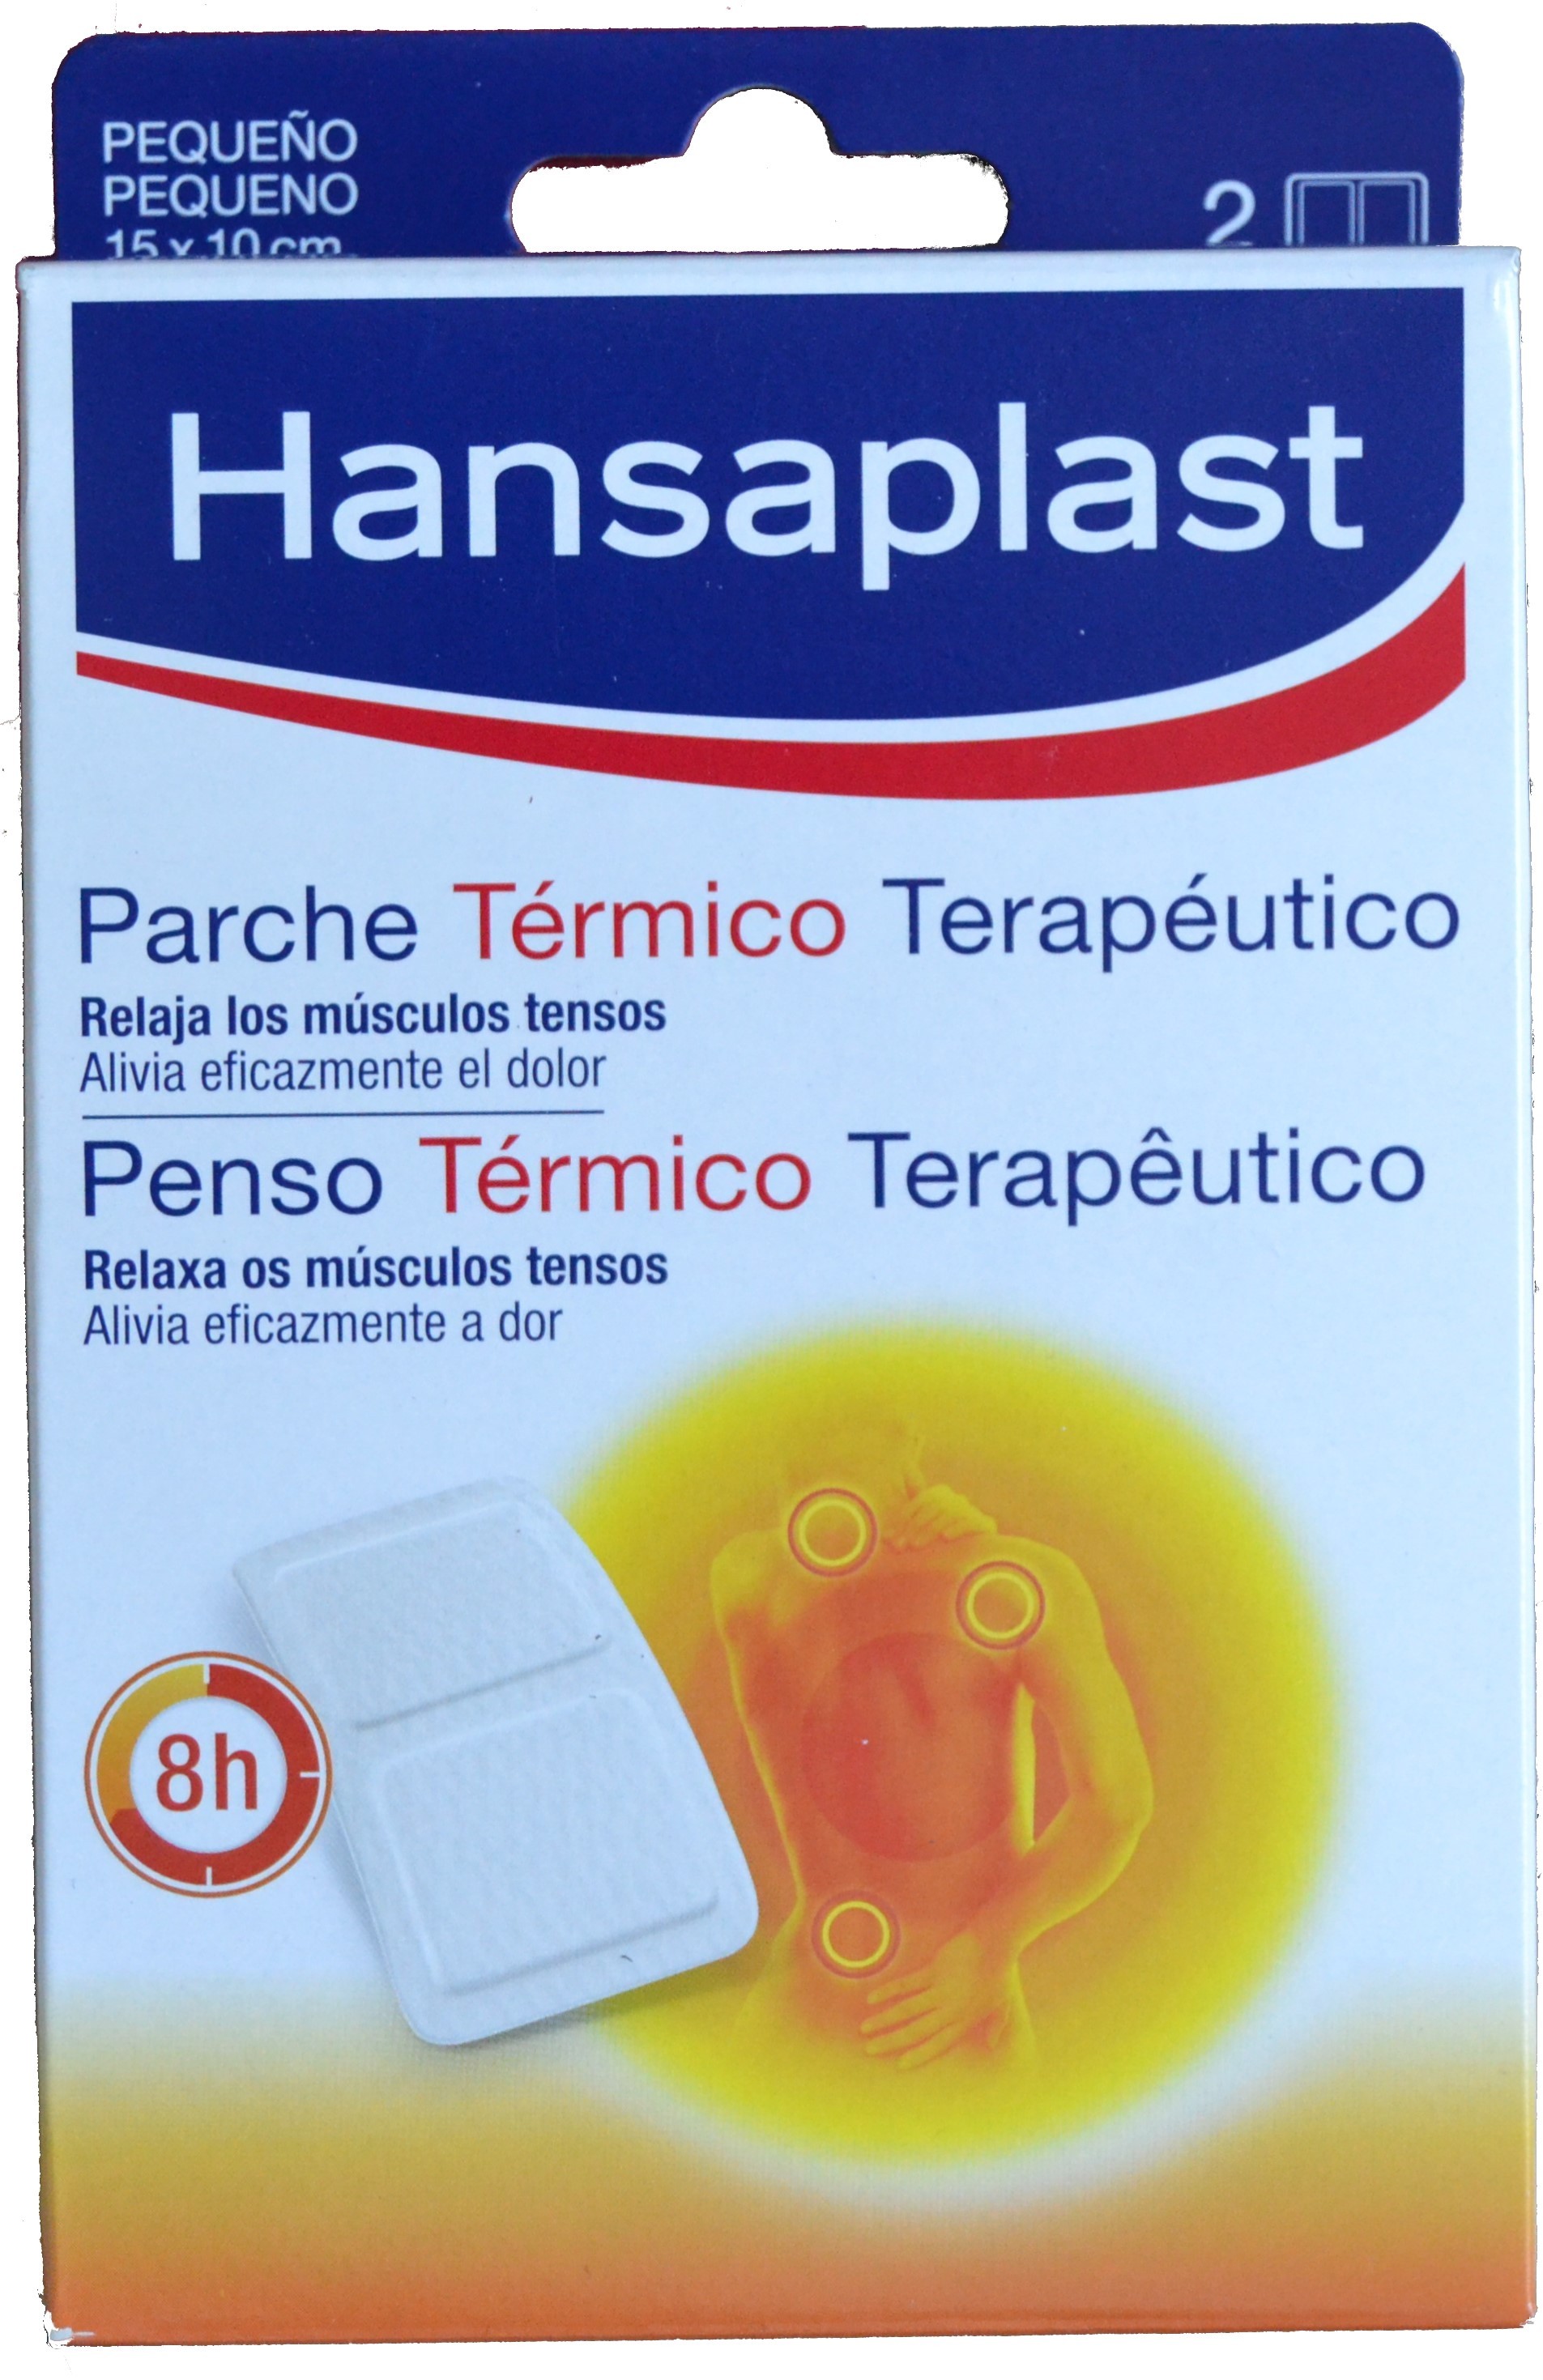 Hansaterm® - Alivio del dolor muscular con calor suave